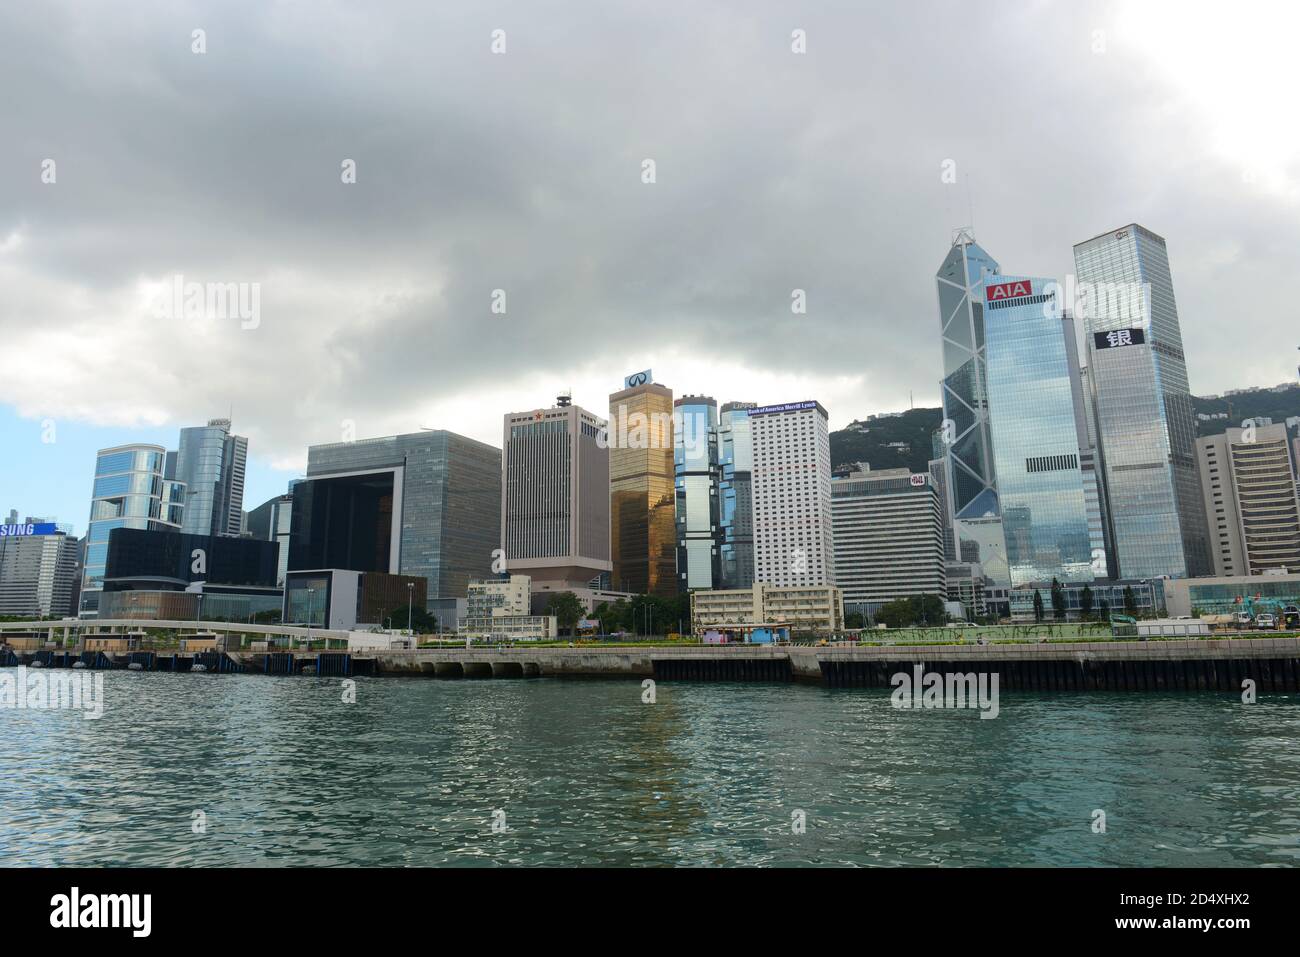 Grattacieli del distretto finanziario centrale di Hong Kong, tra cui Bank of China Tower, AIA Central, Cheung Kong Center, ecc. a Hong Kong, Cina. Foto Stock